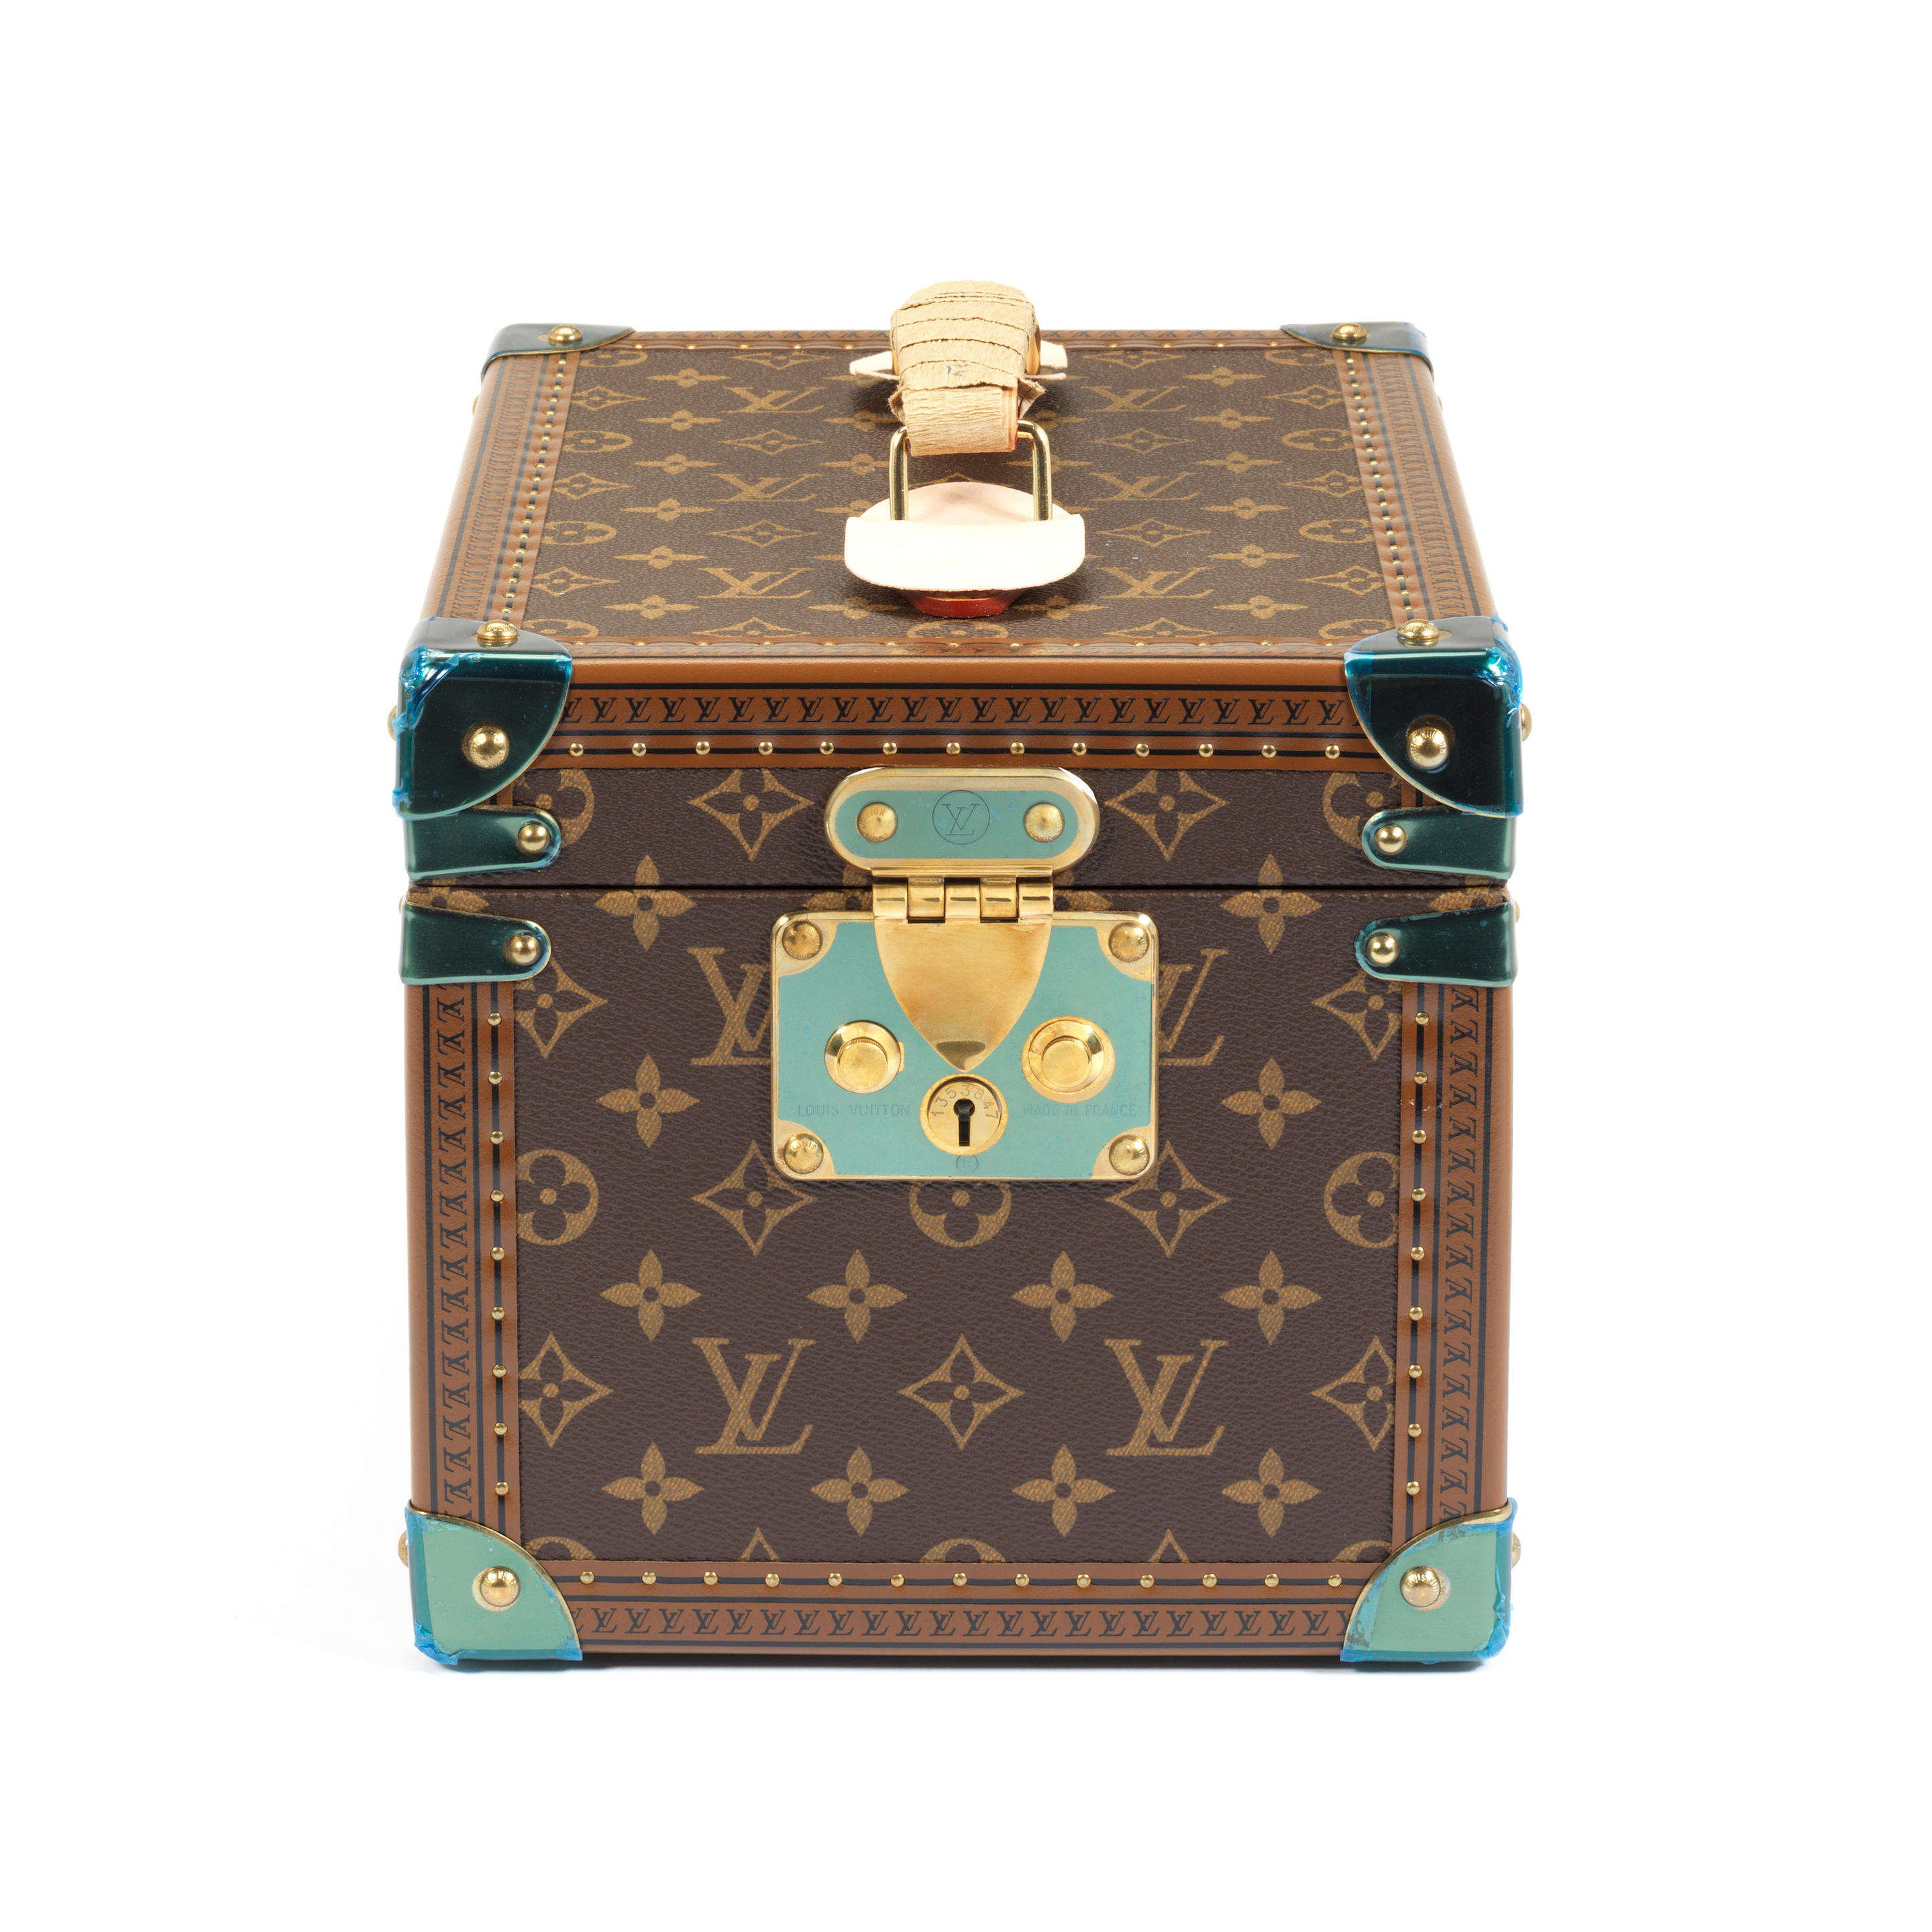 Louis Vuitton Box And Dust Bag - Gem